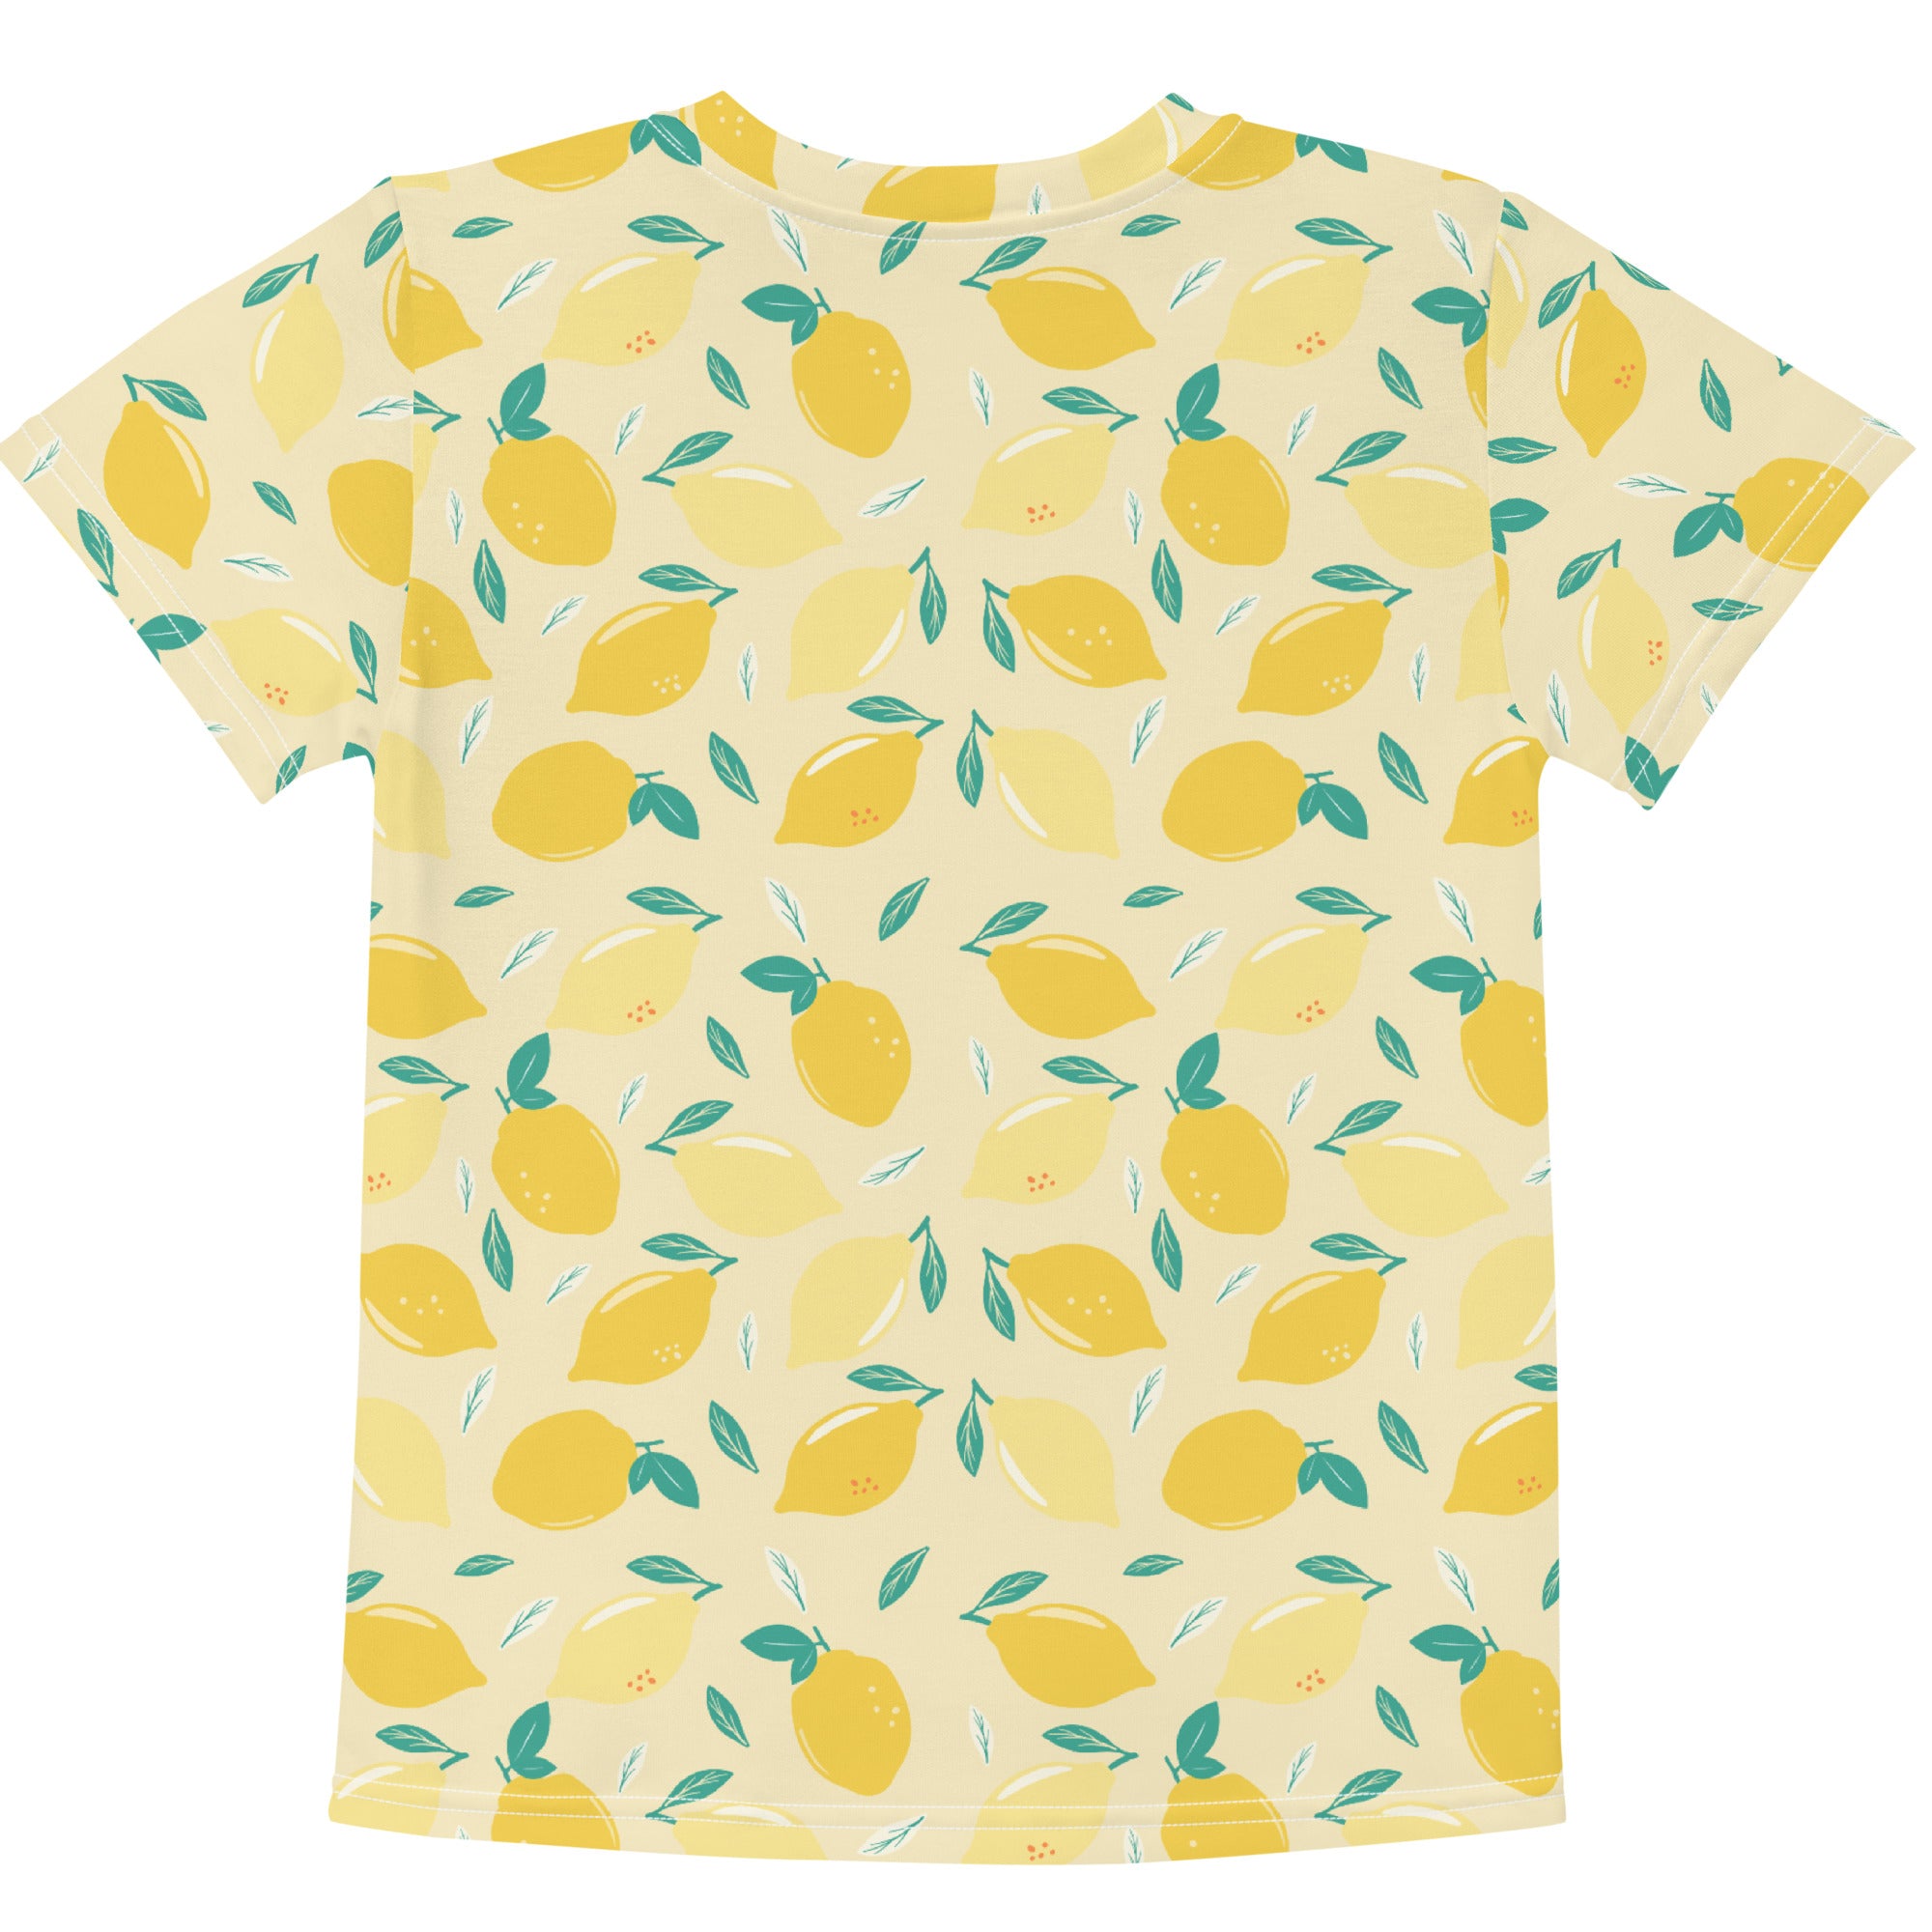 back side of the lemon design shirt